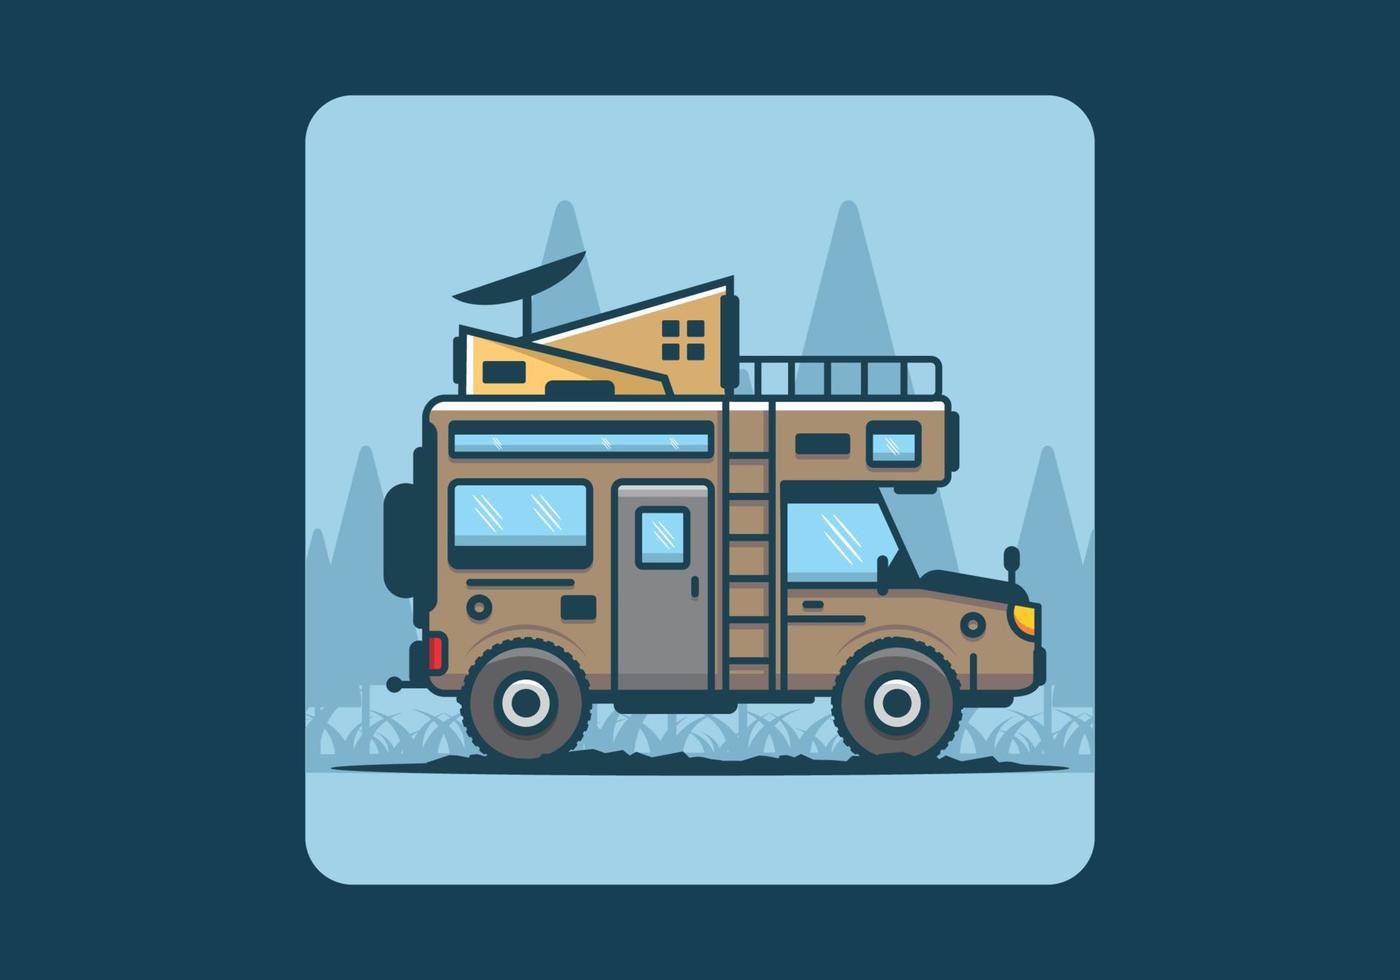 Strong big camper van camping illustration vector